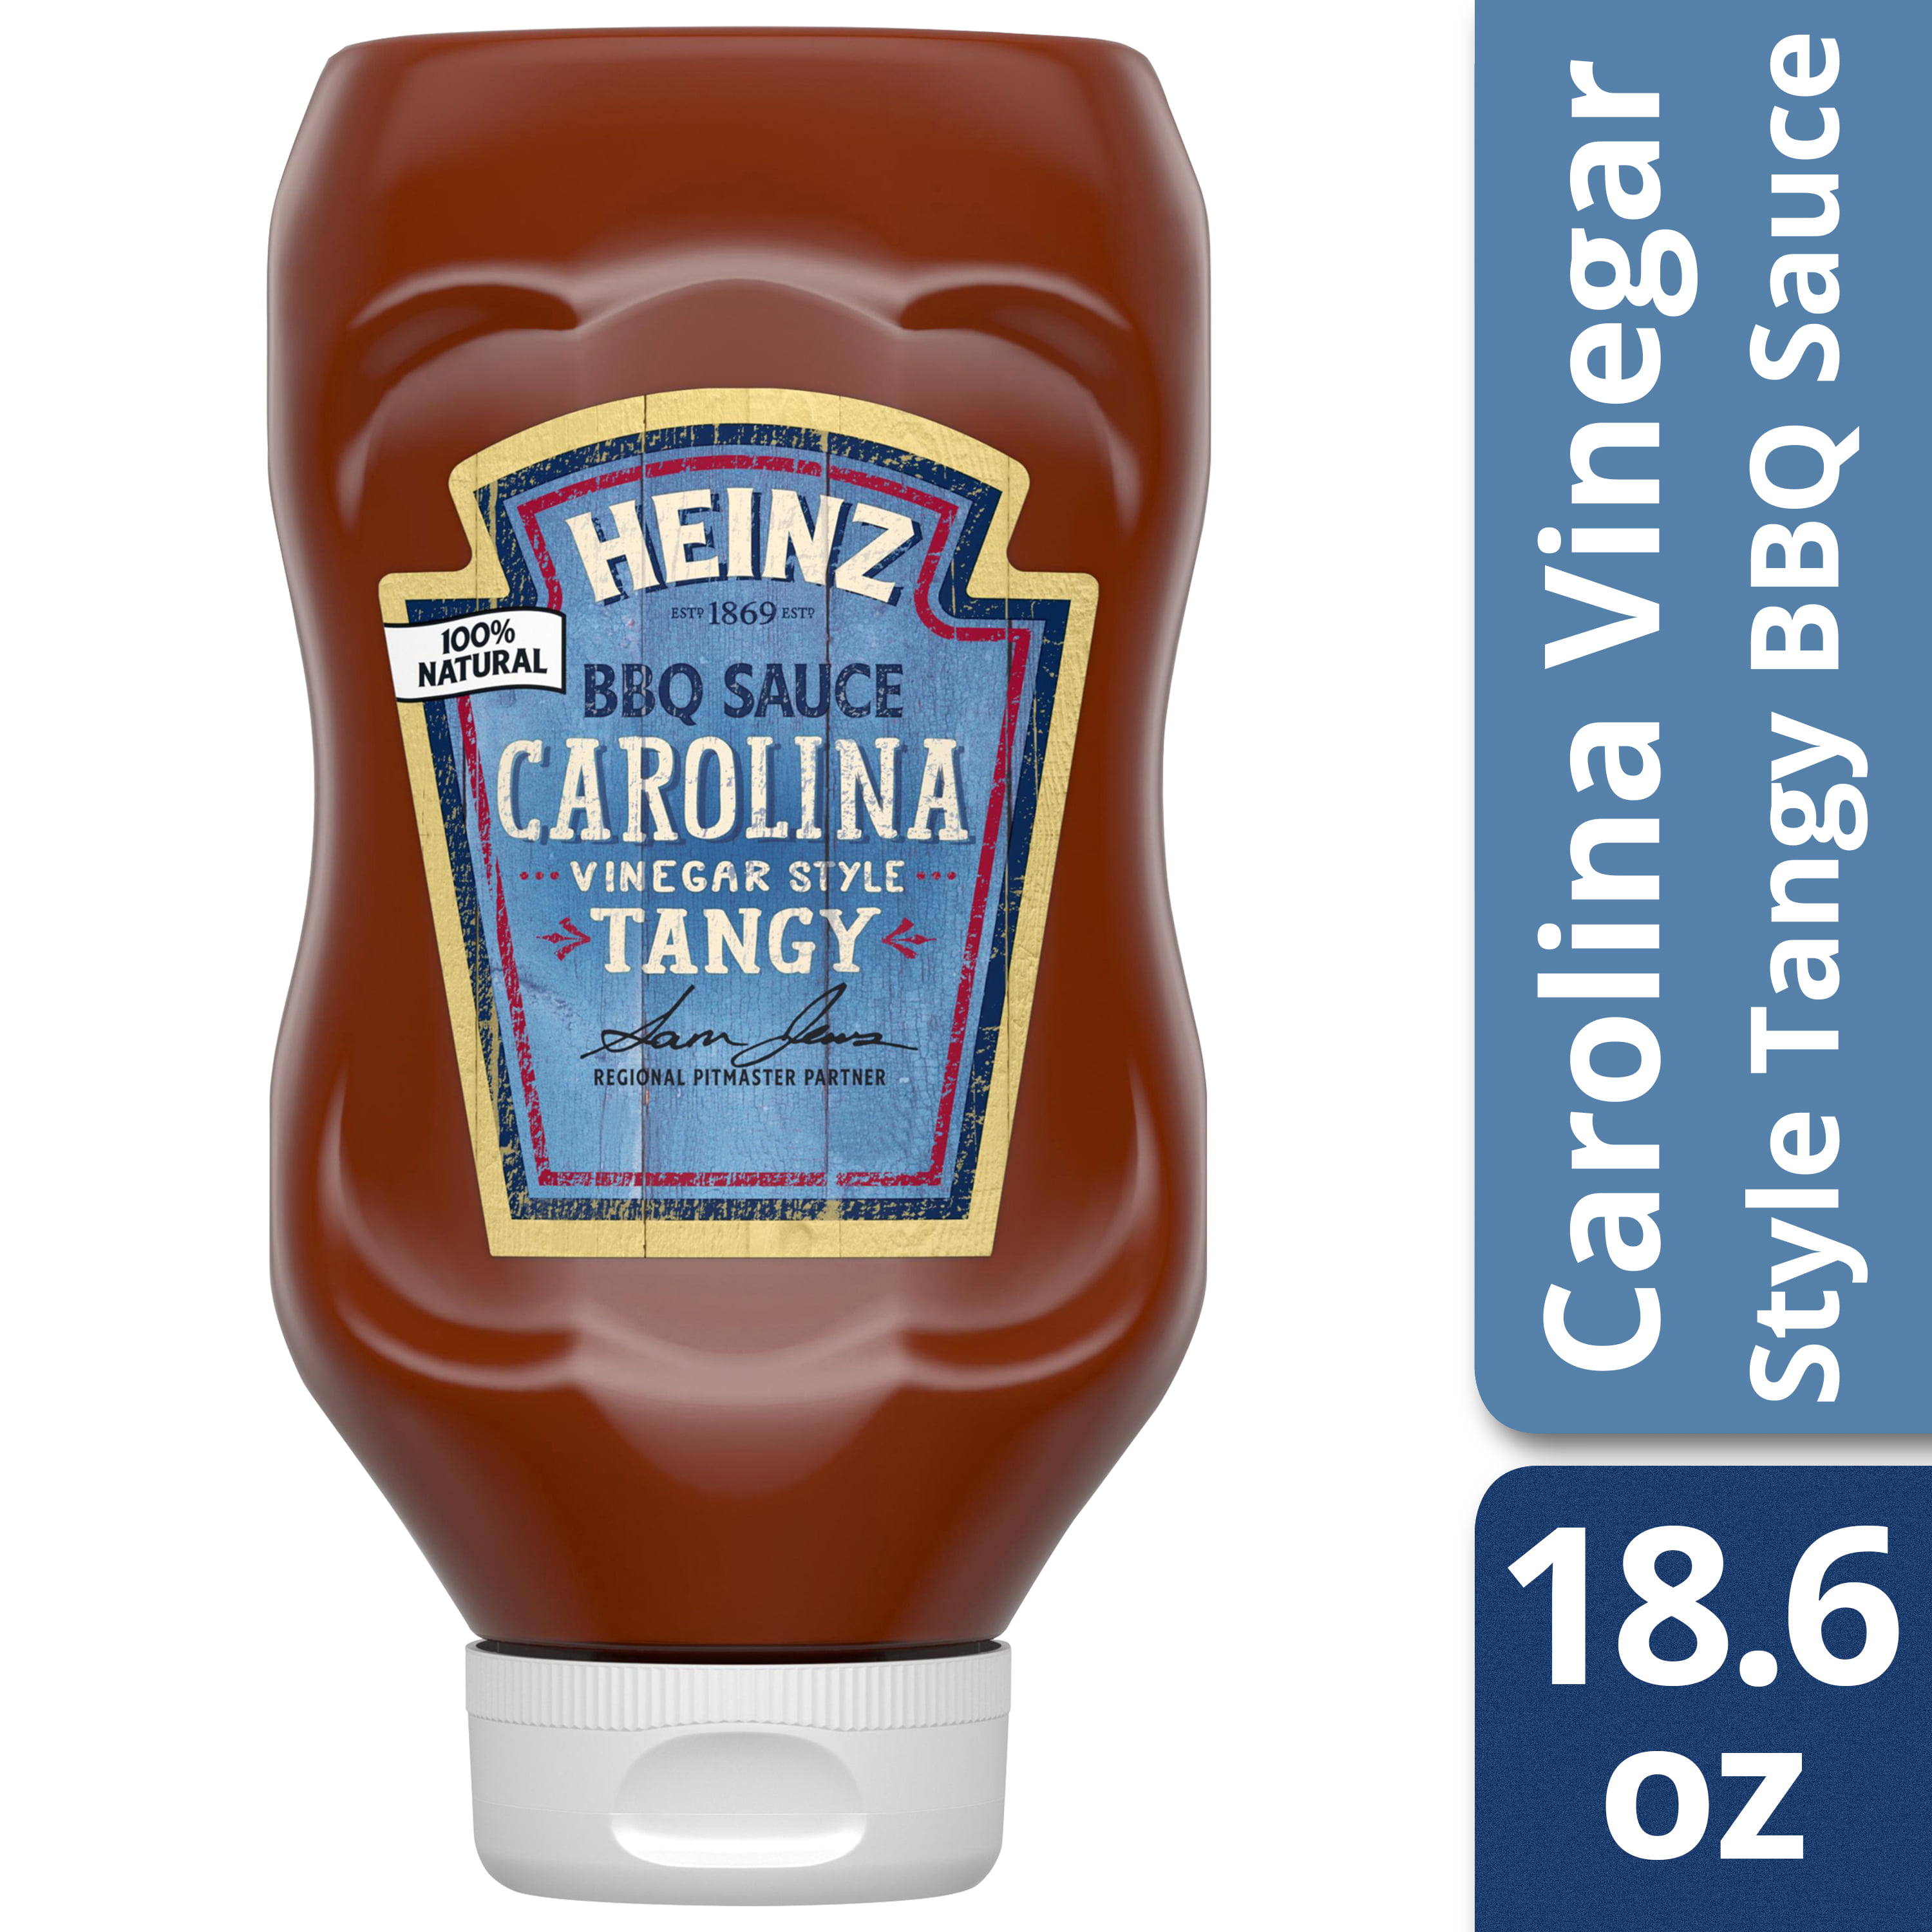 Heinz Carolina Vinegar Style Bbq Sauce 18 6 Oz Bottle Walmart Com Walmart Com,What Is The Average Lifespan Of A Cat